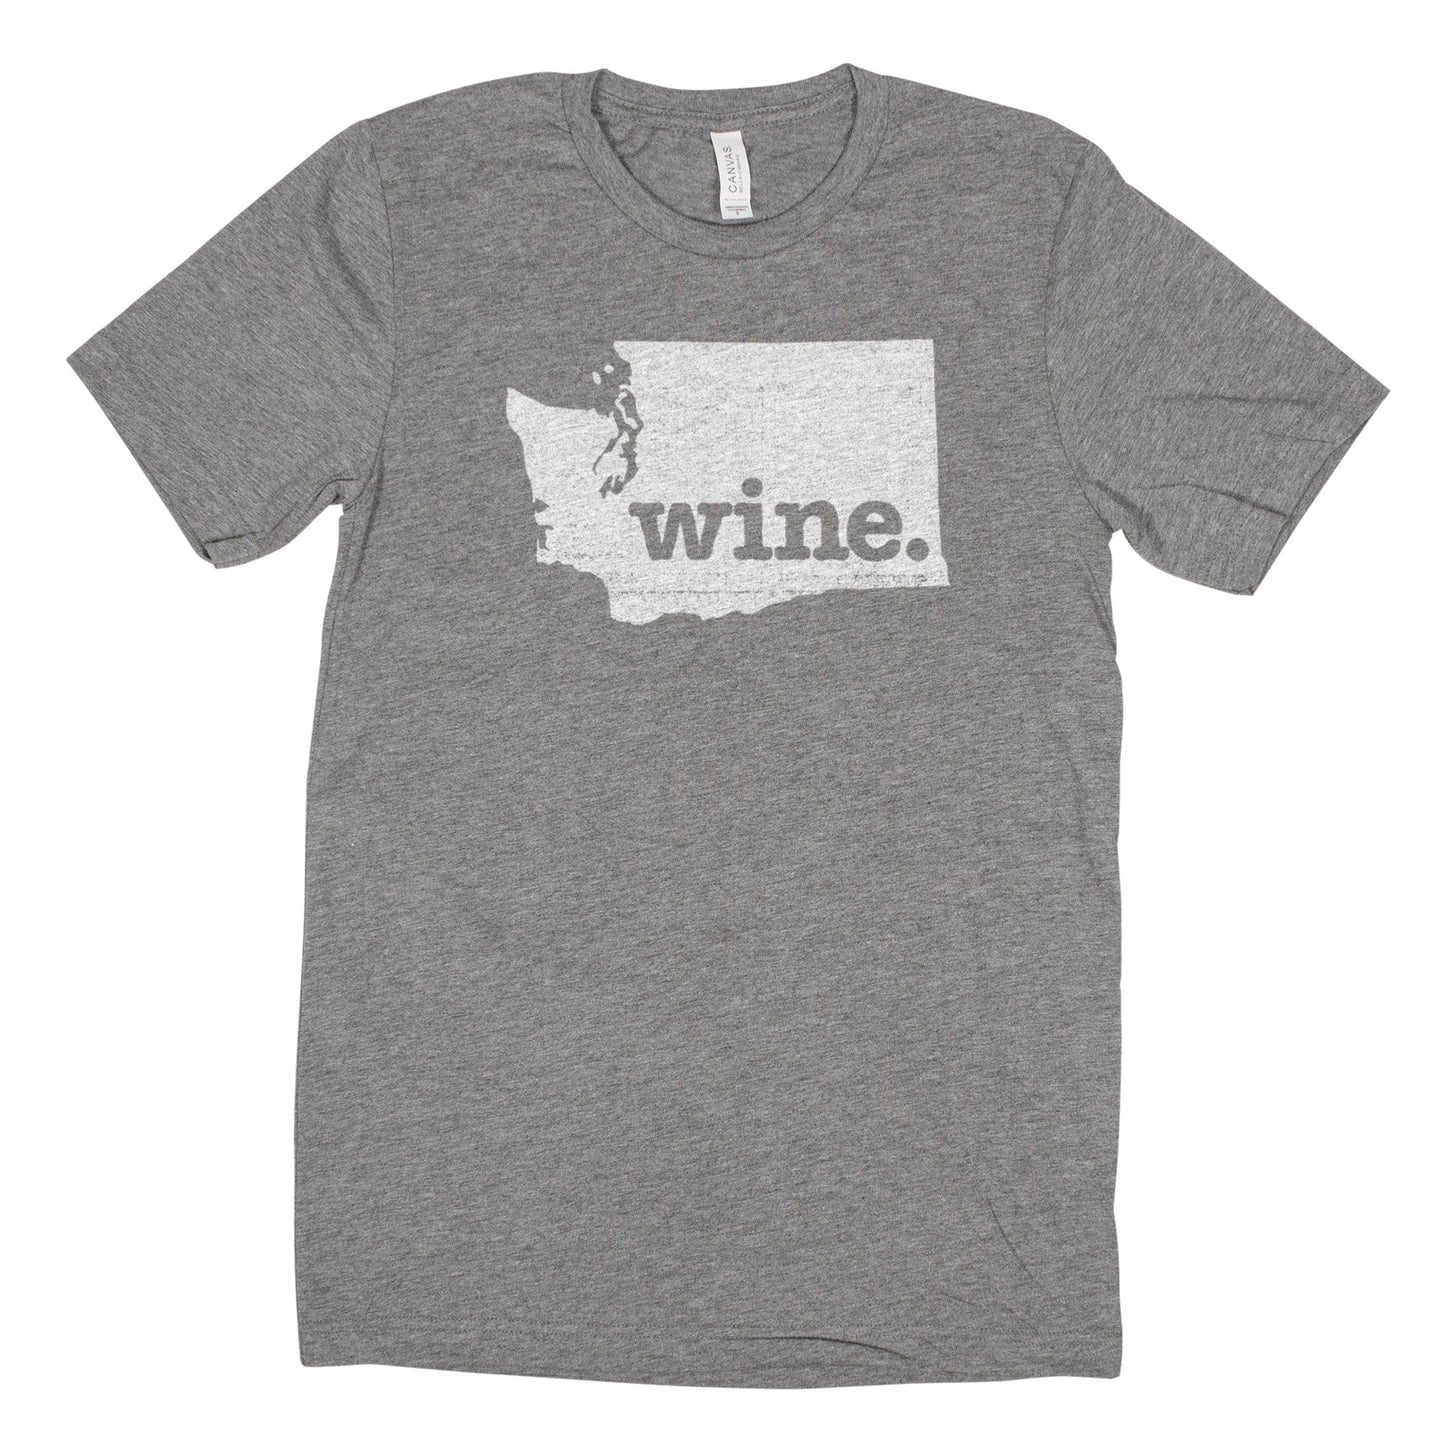 wine. Men's Unisex T-Shirt - Washington